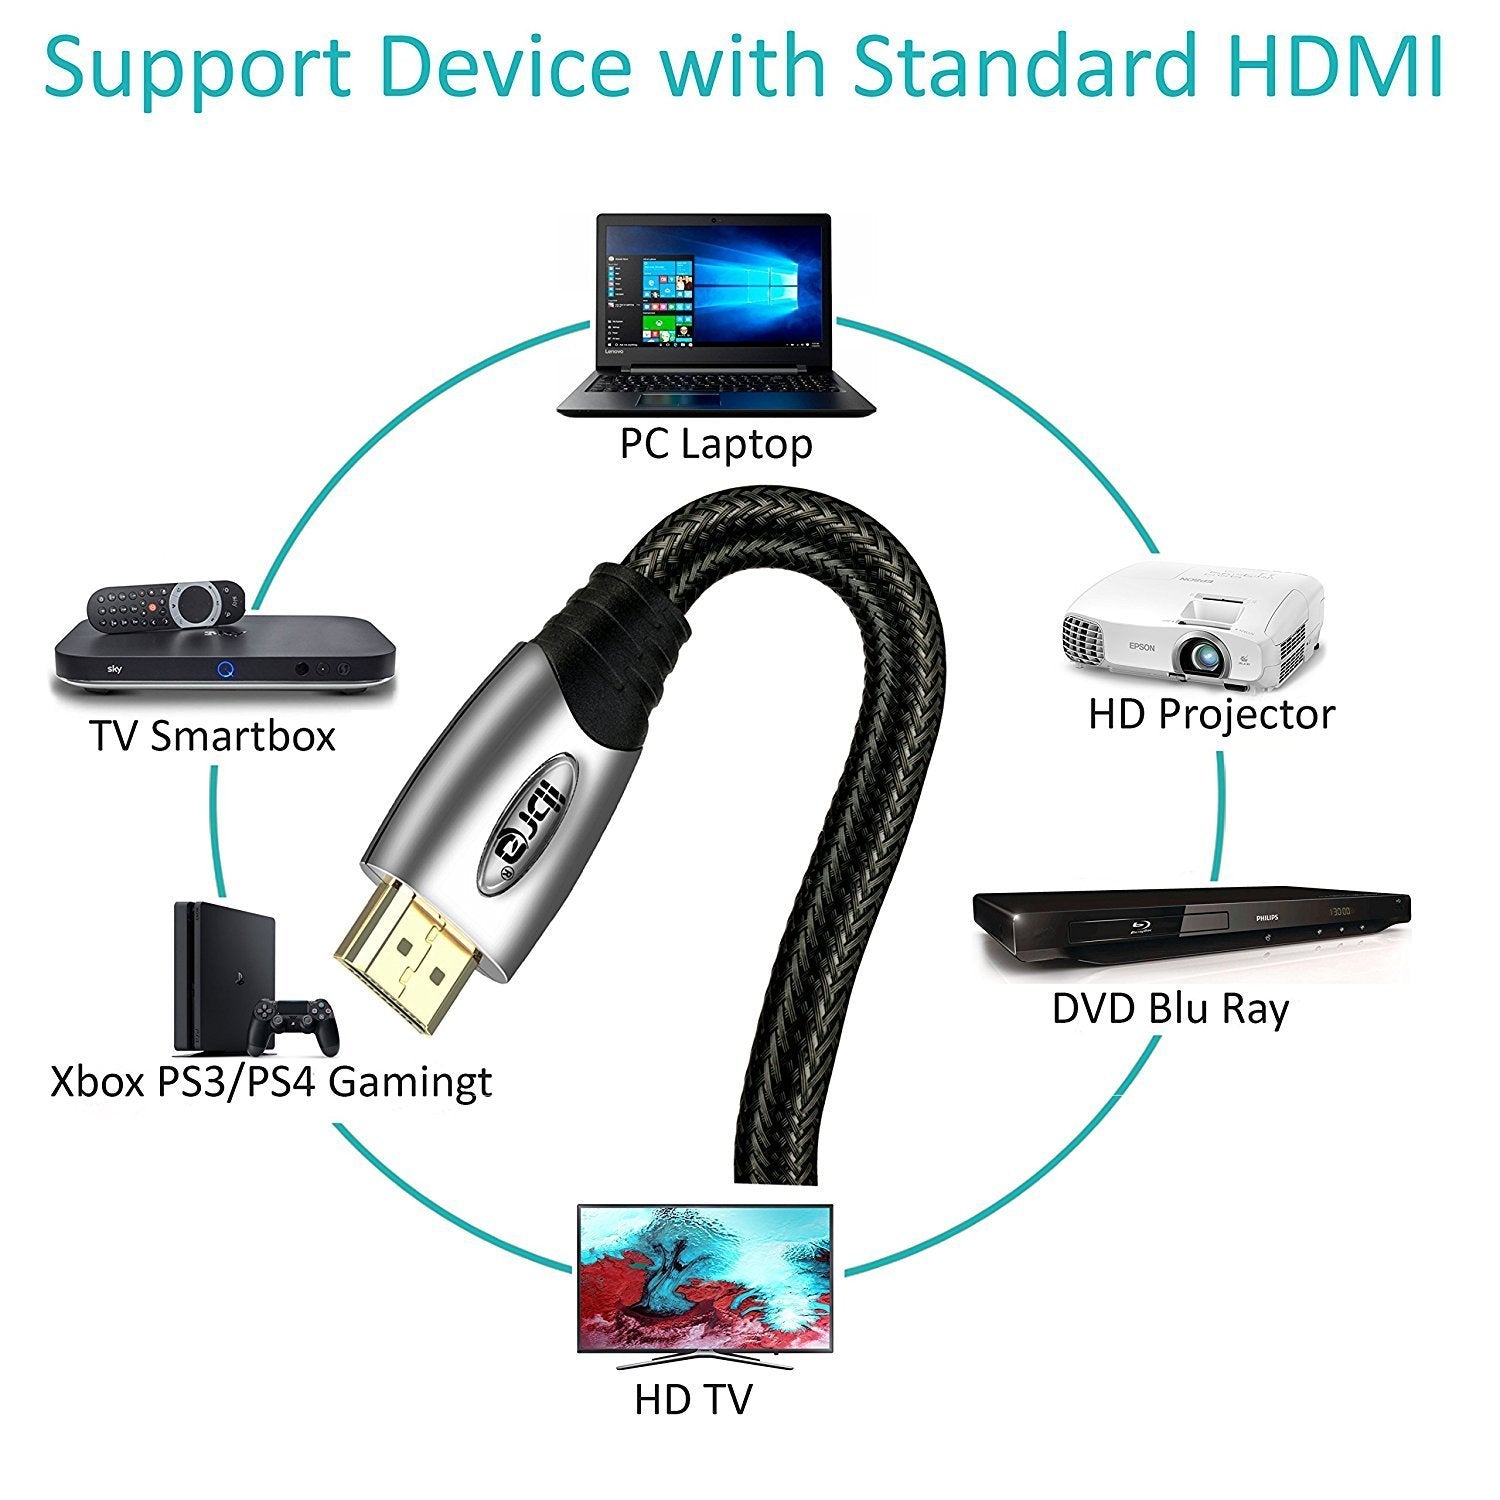 High Speed HDMI Cable v2.0/1.4a 18Gbps 3D TV 2160p PS4 SKY HD 4K@60Hz Ultra HD Ethernet Audio Return Virgin BT Gold Connectors Nylon Braided - 4M - IBRA PLATINUM